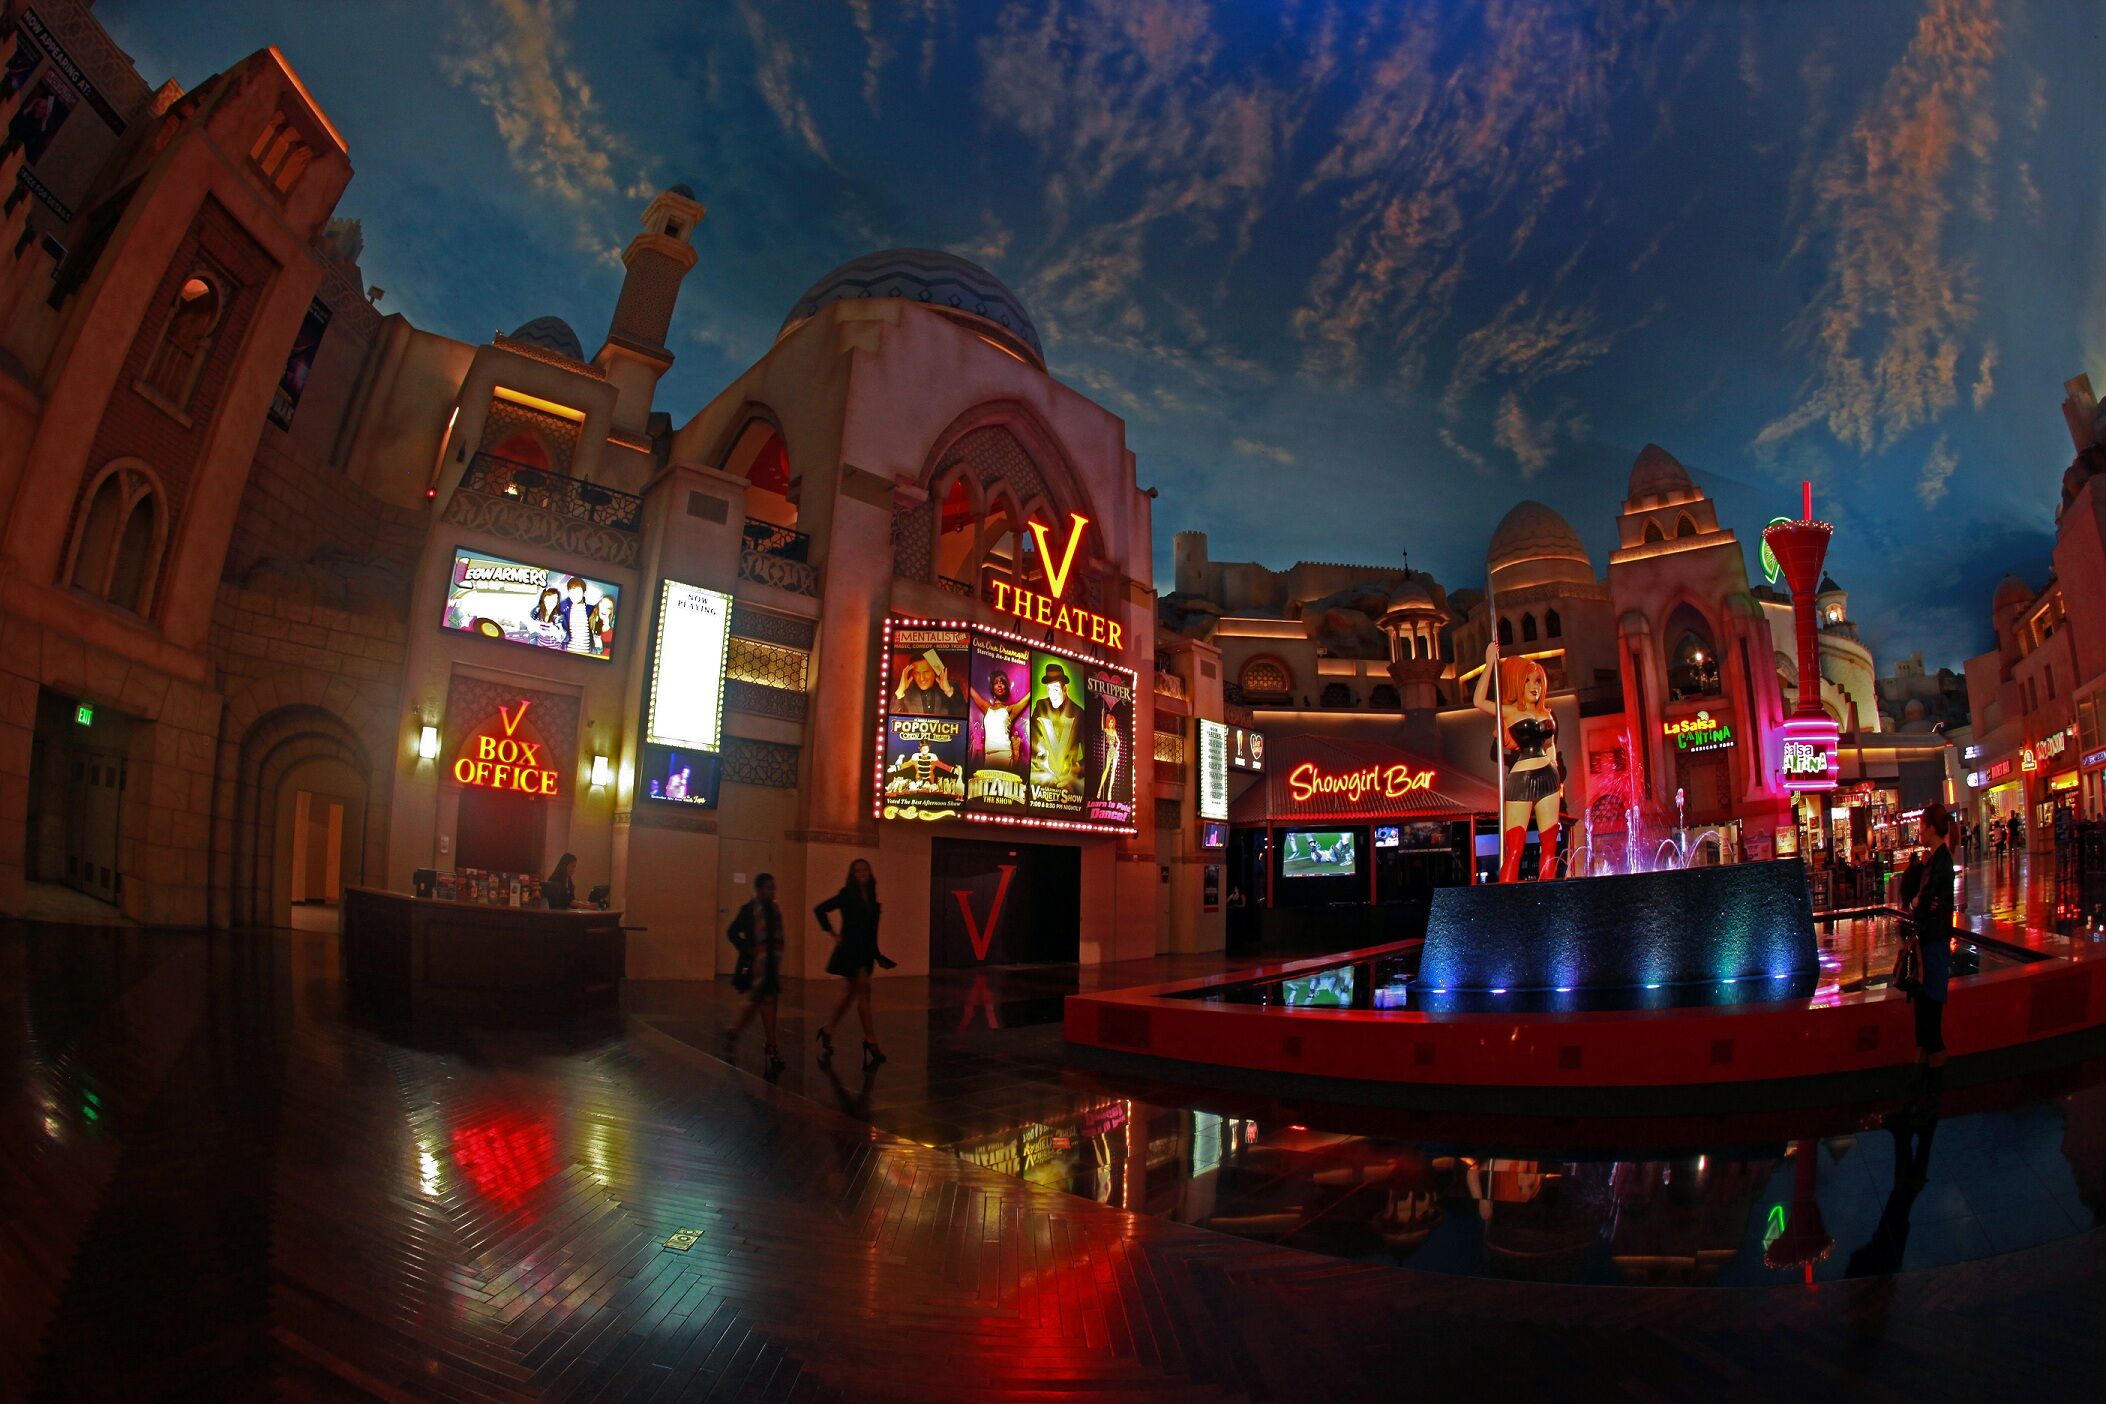 Planet Hollywood Las Vegas, CasinoCyclopedia